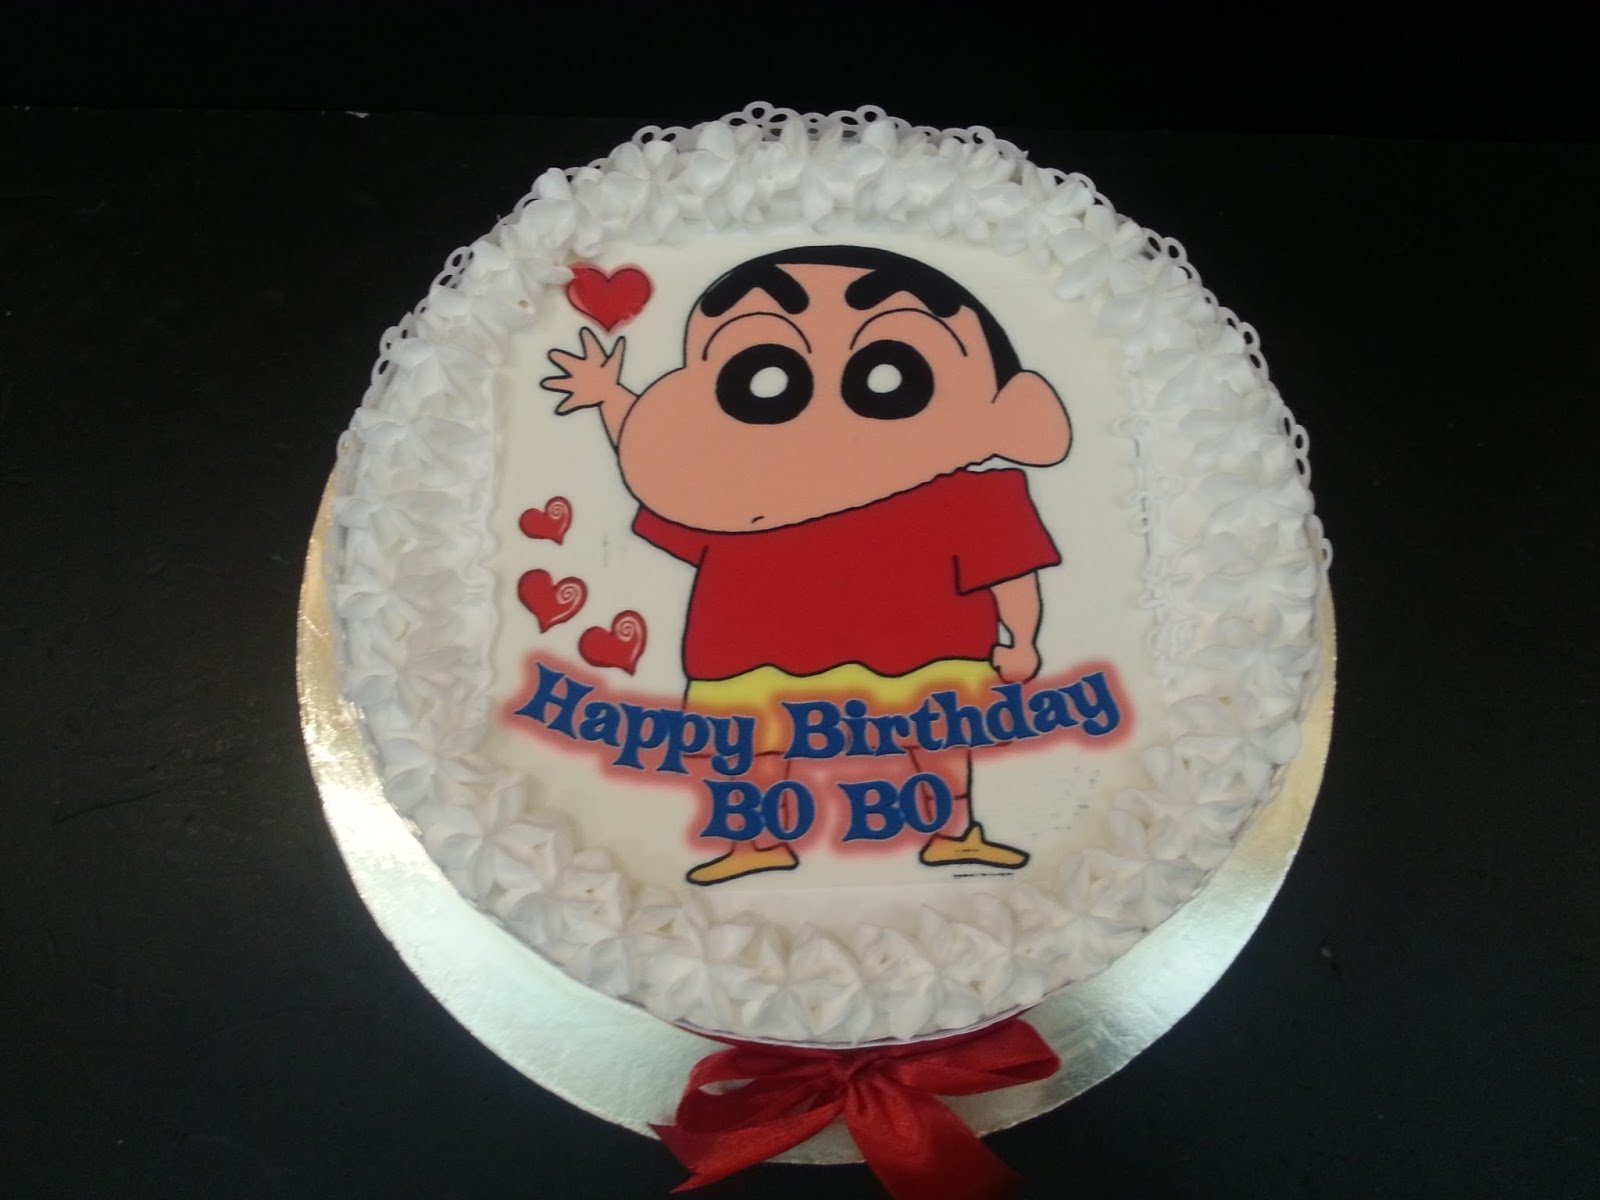 anytimecakes - Shinchan cake... . . #fondantcake #shinchan #shinchancake # cake #birthdaycakes #chocolatesponge #chocolateganache #chocochipsfilling  #redblackyellowwhite #cakelover #shinchanlover #anytimecakes #funny  #homebakers #homemadecakes ...